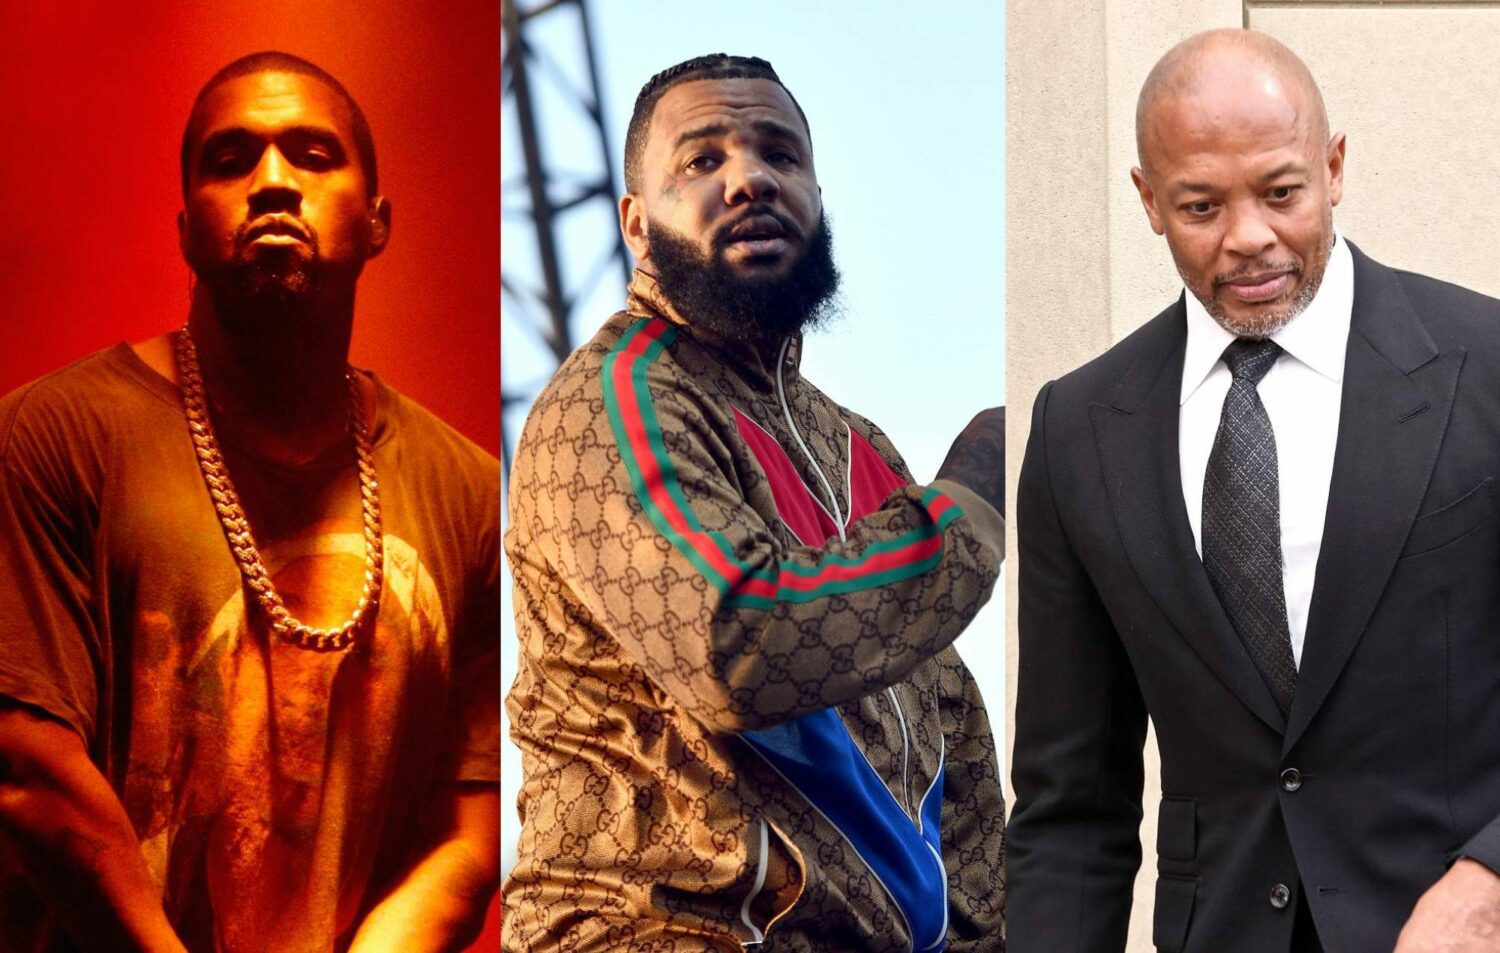 Capa The Game, Kanye West e Dr. Dre